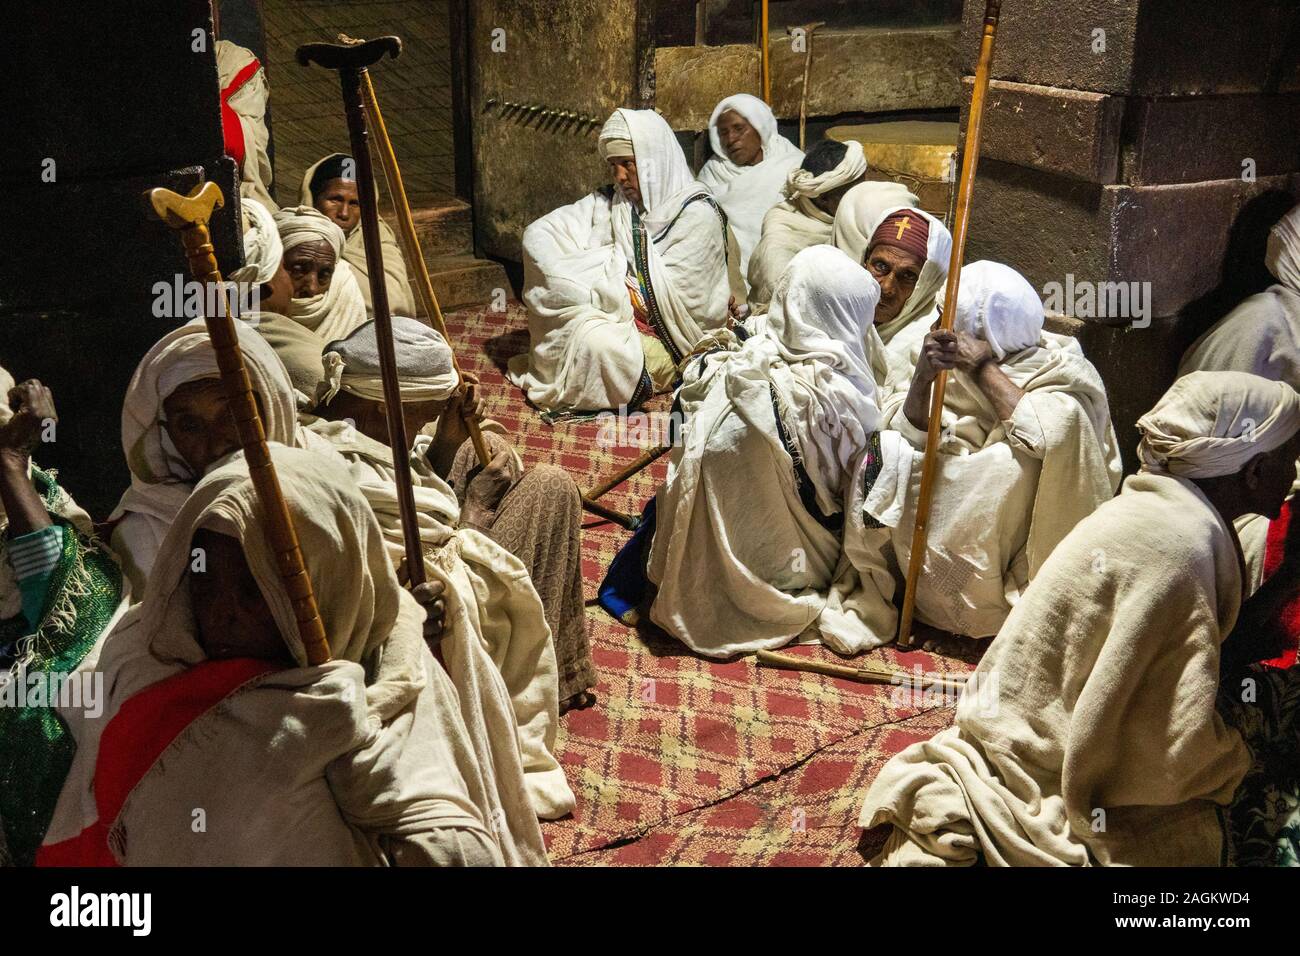 Ethiopia, Amhara Region, Lalibela, Yemrehanna Kristos monastery, festival of Archangel Gabriel, female pilgrims sat inside cave church Stock Photo